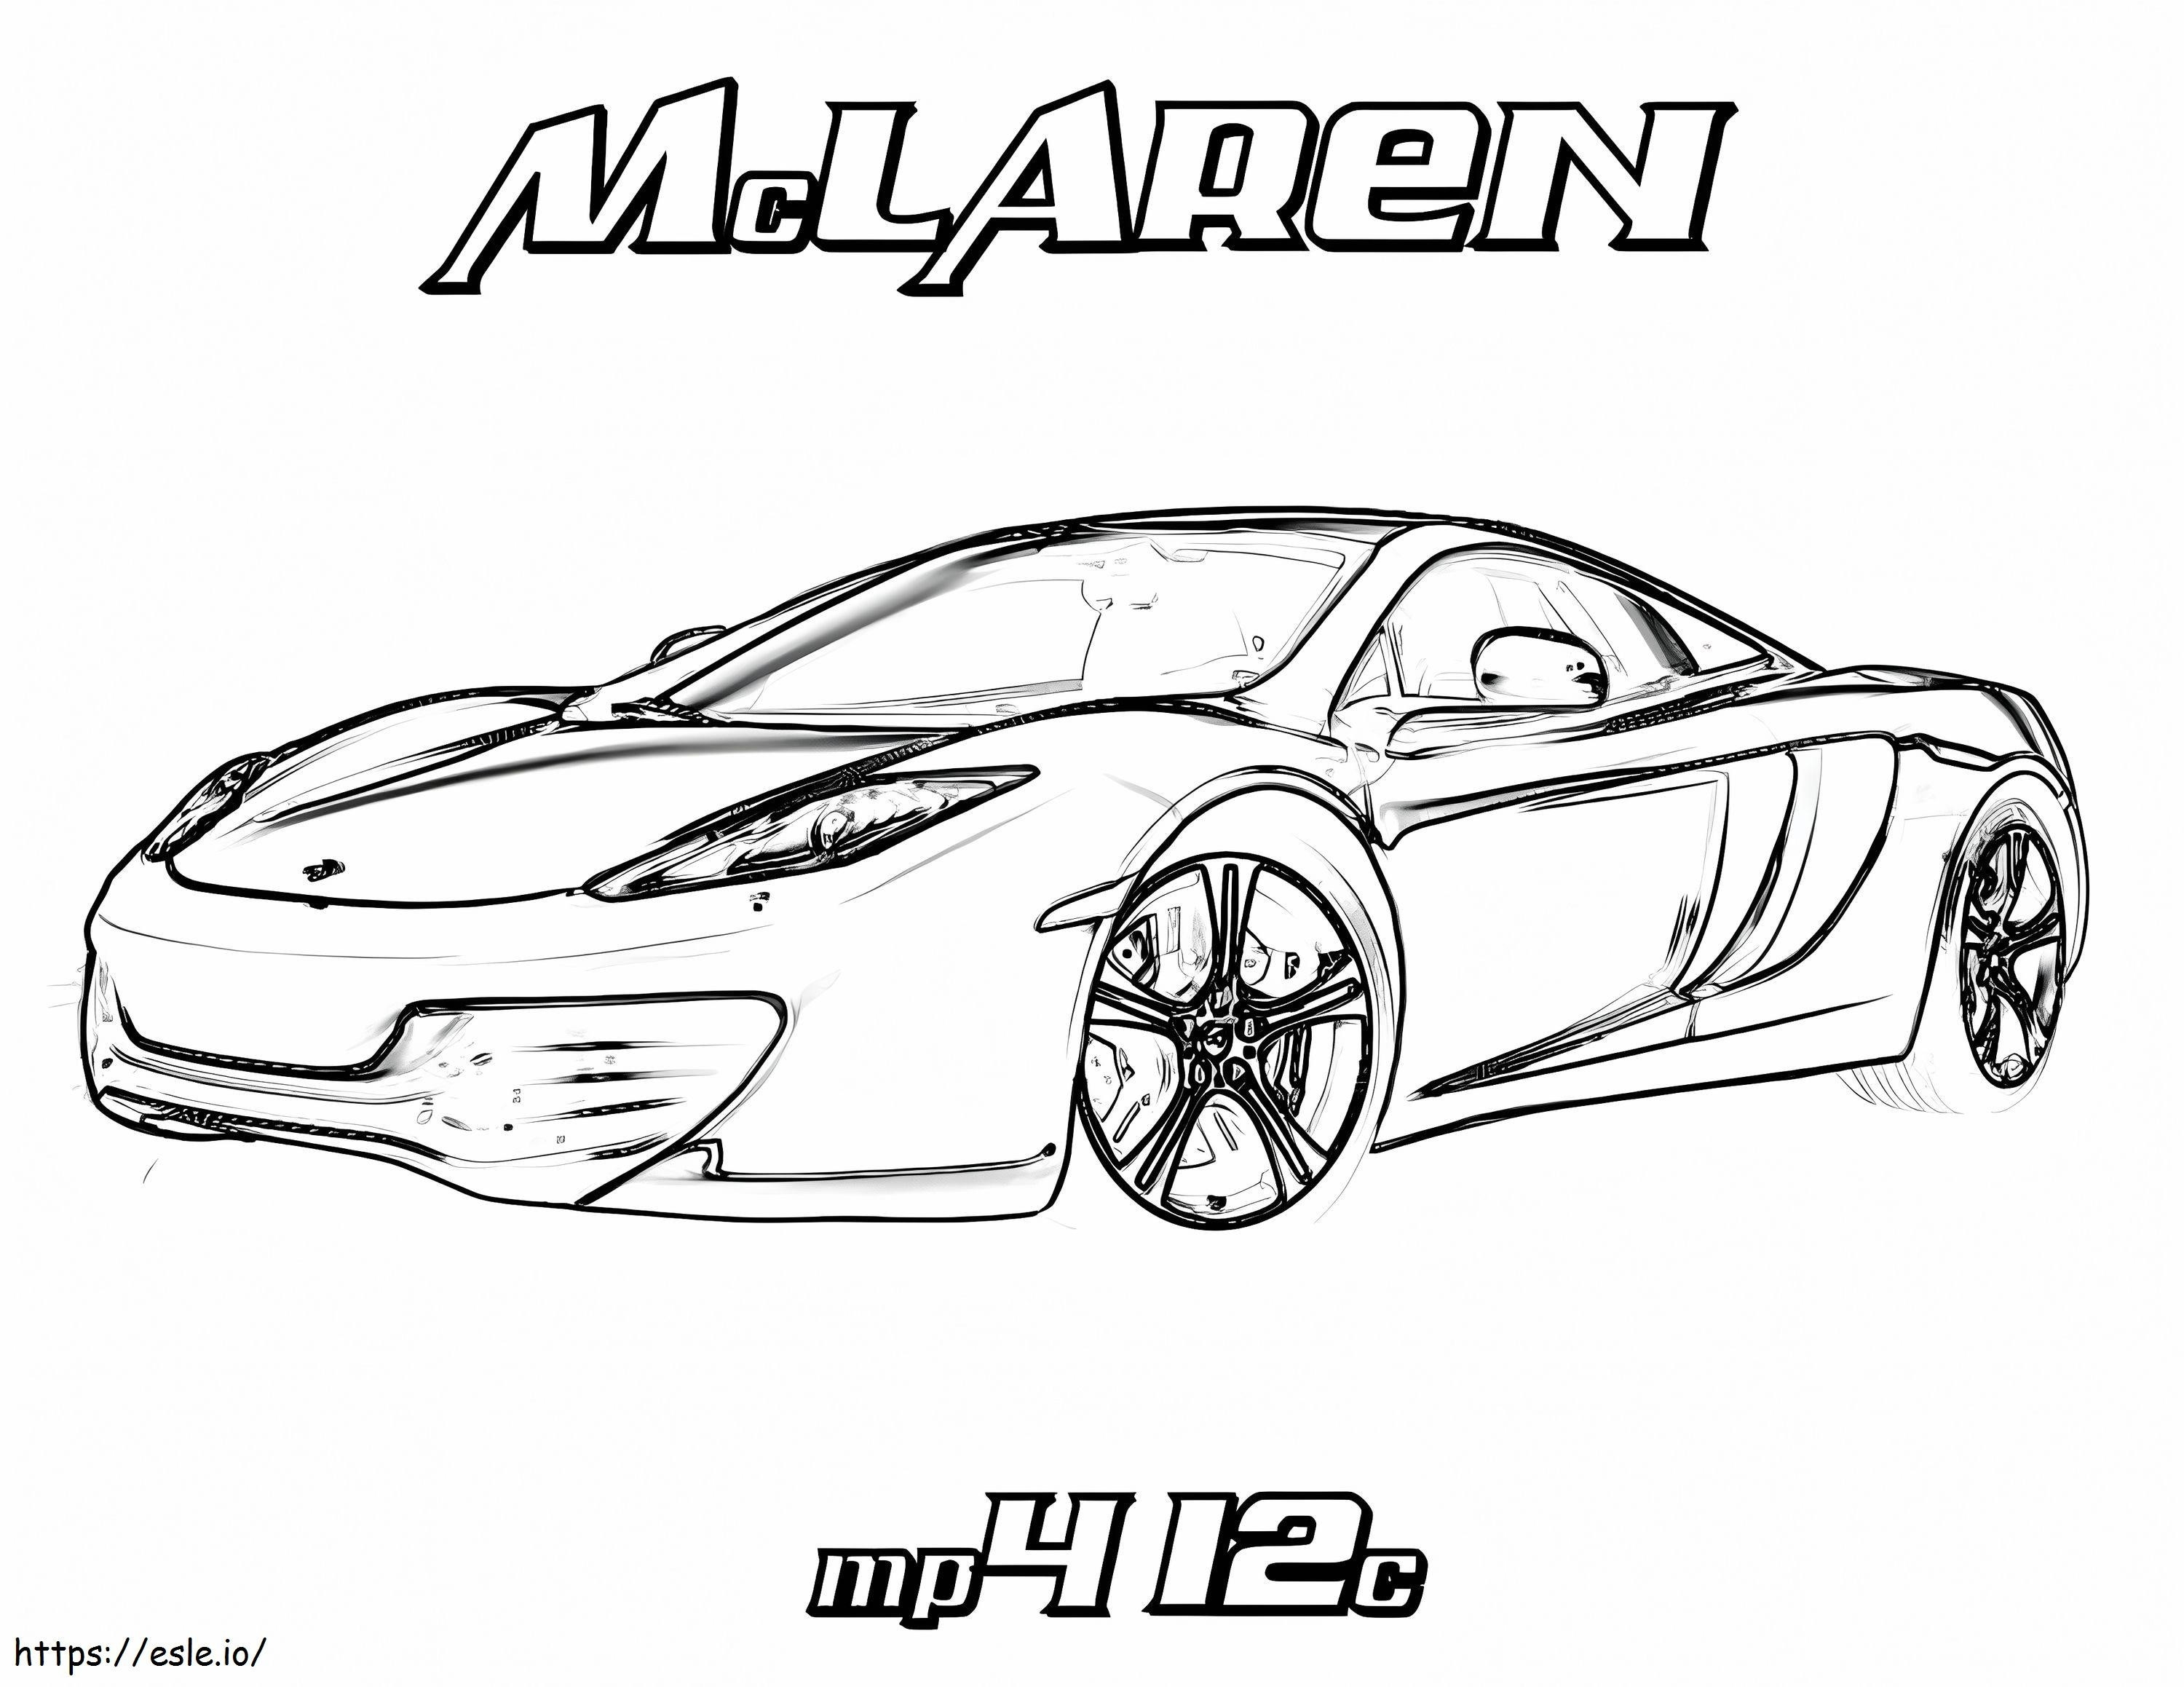 McLaren MP4 12C coloring page